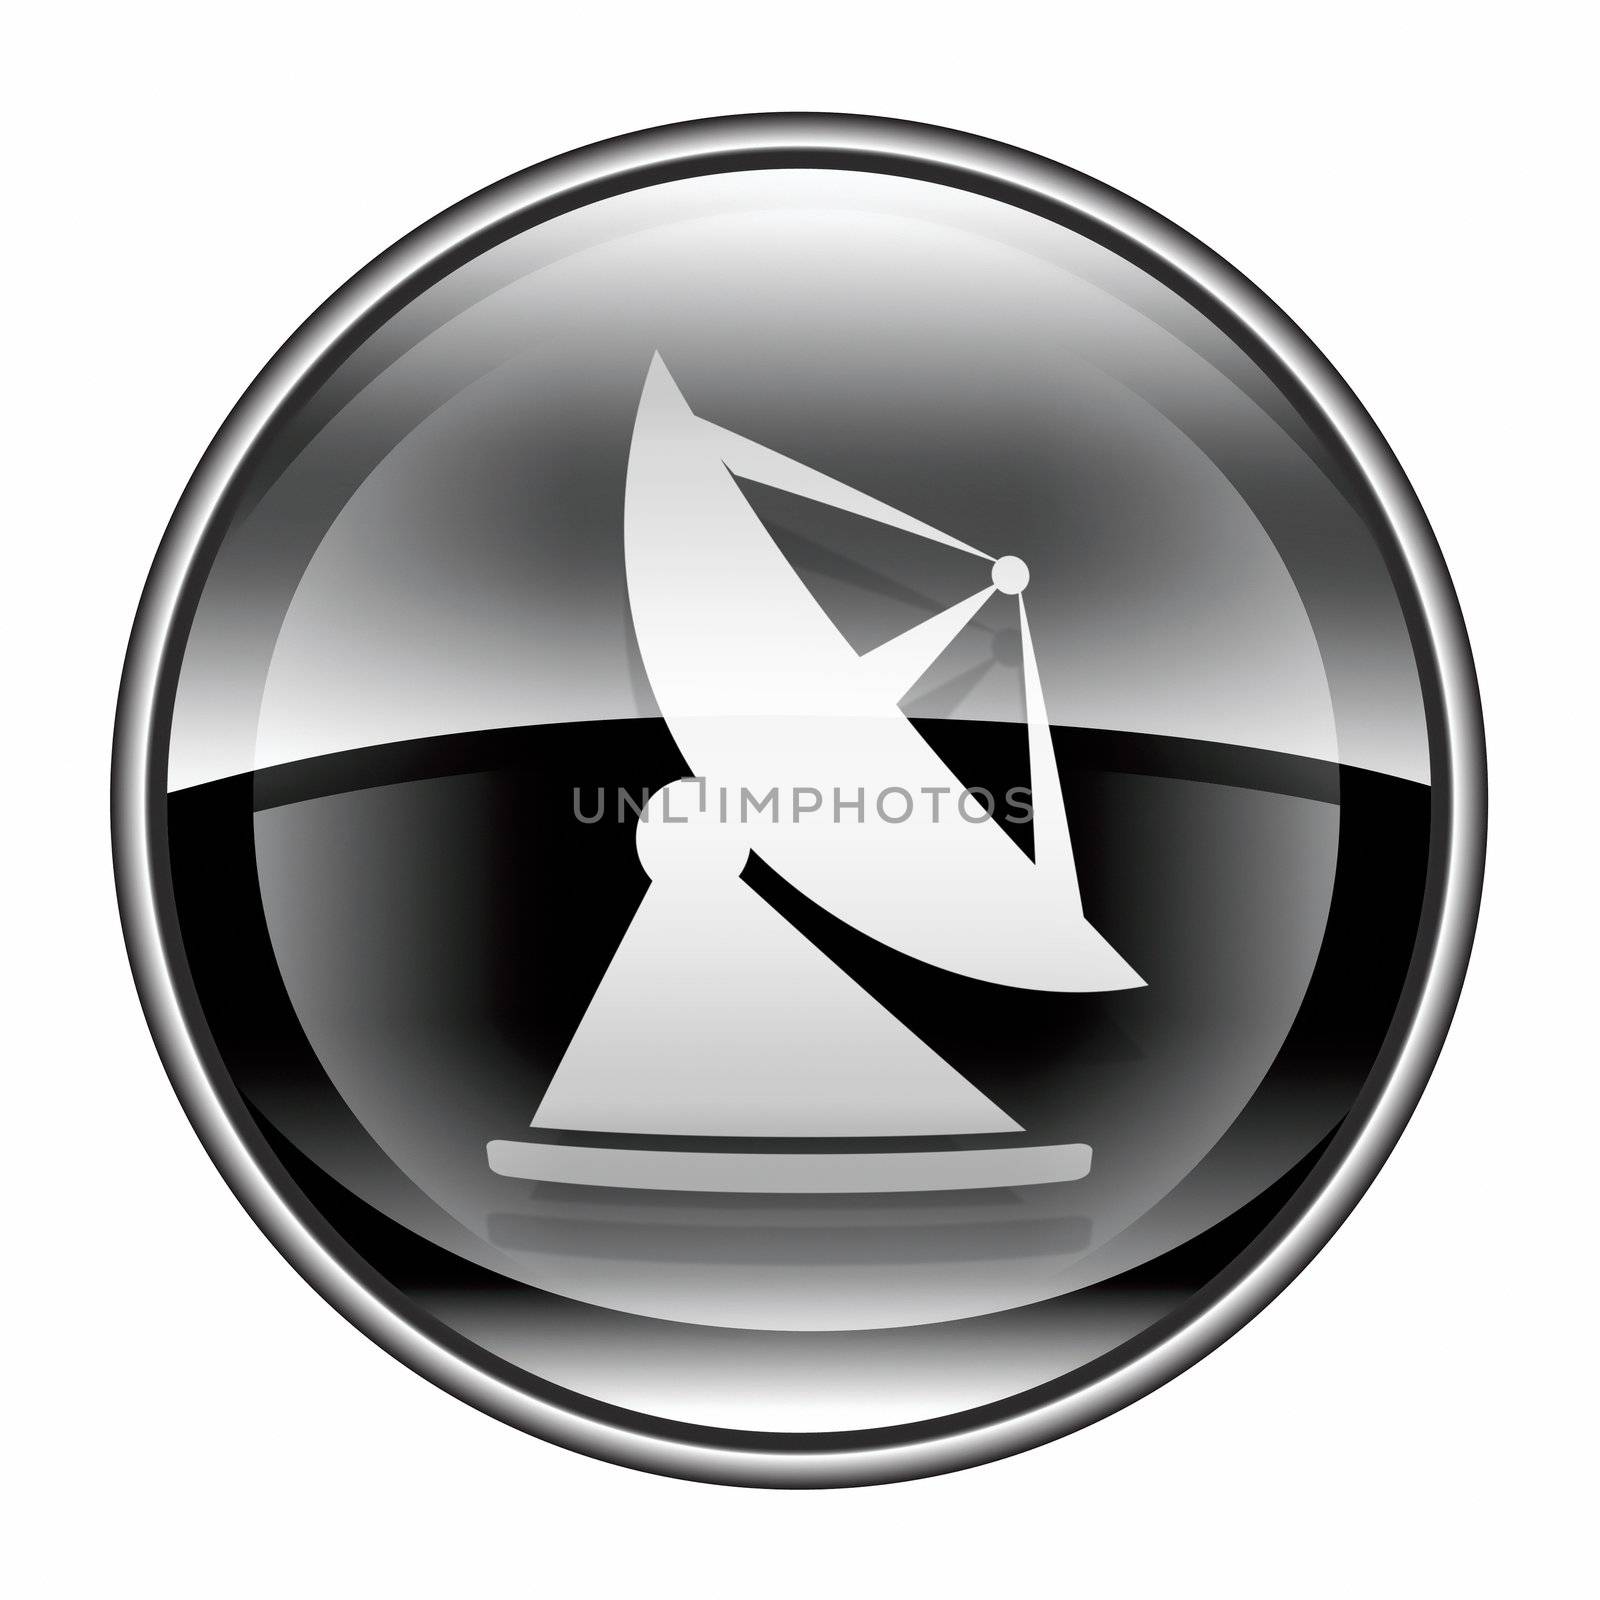 Antenna icon black, isolated on white background